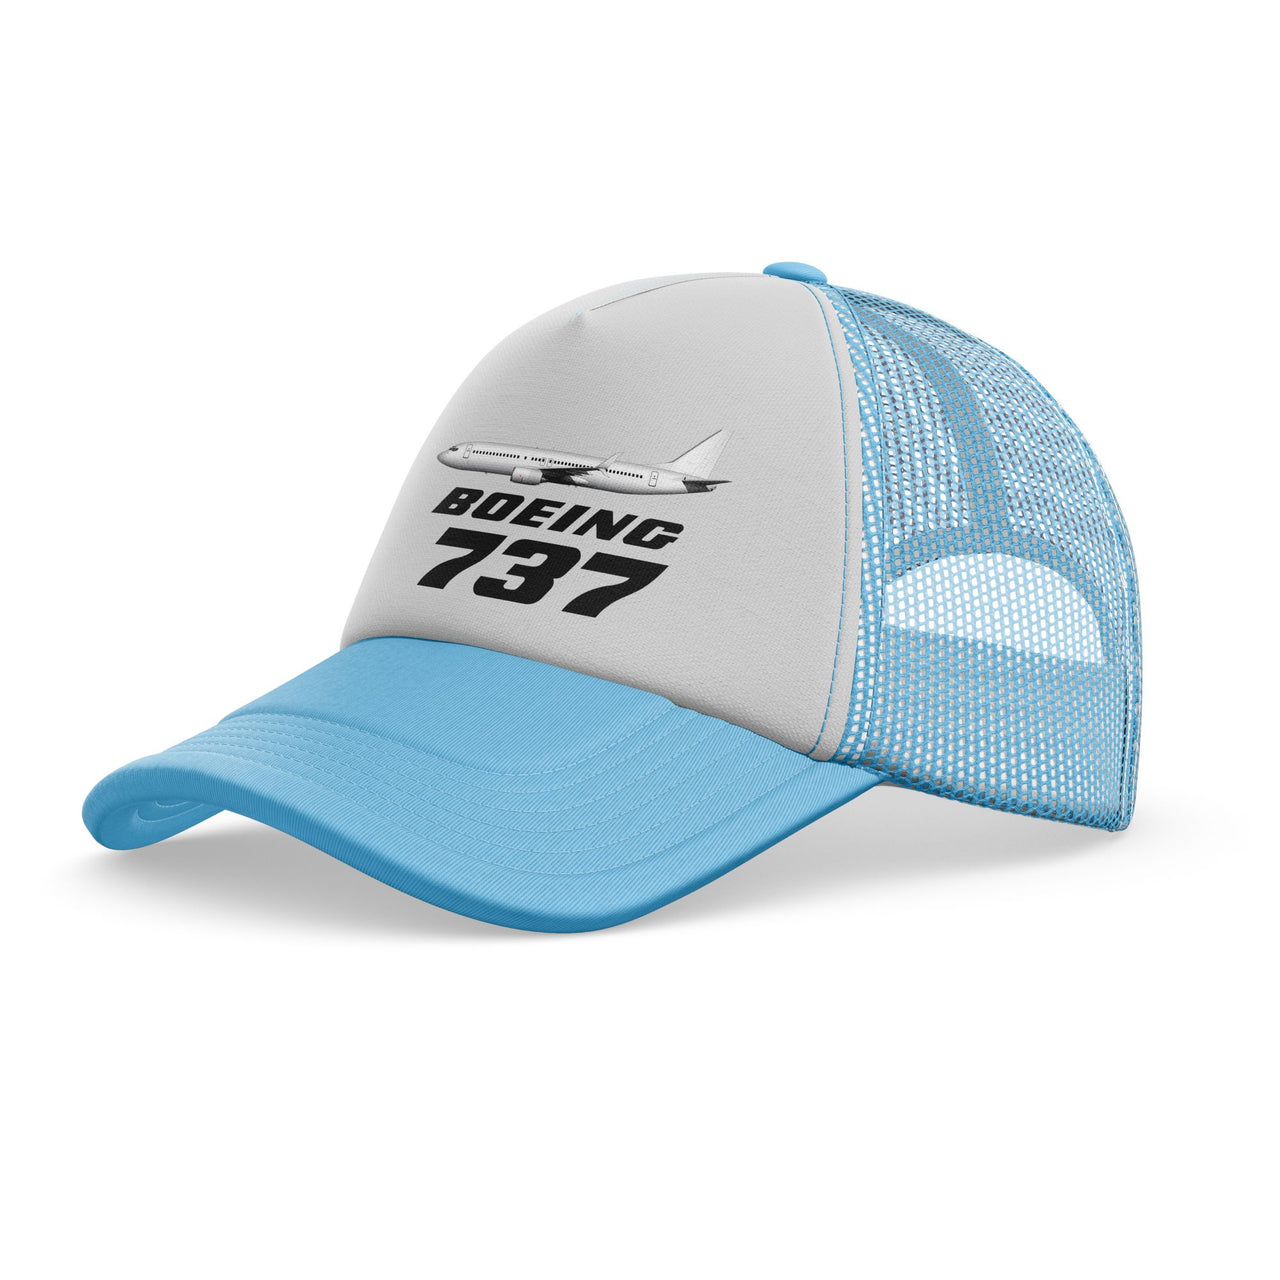 The Boeing 737 Designed Trucker Caps & Hats